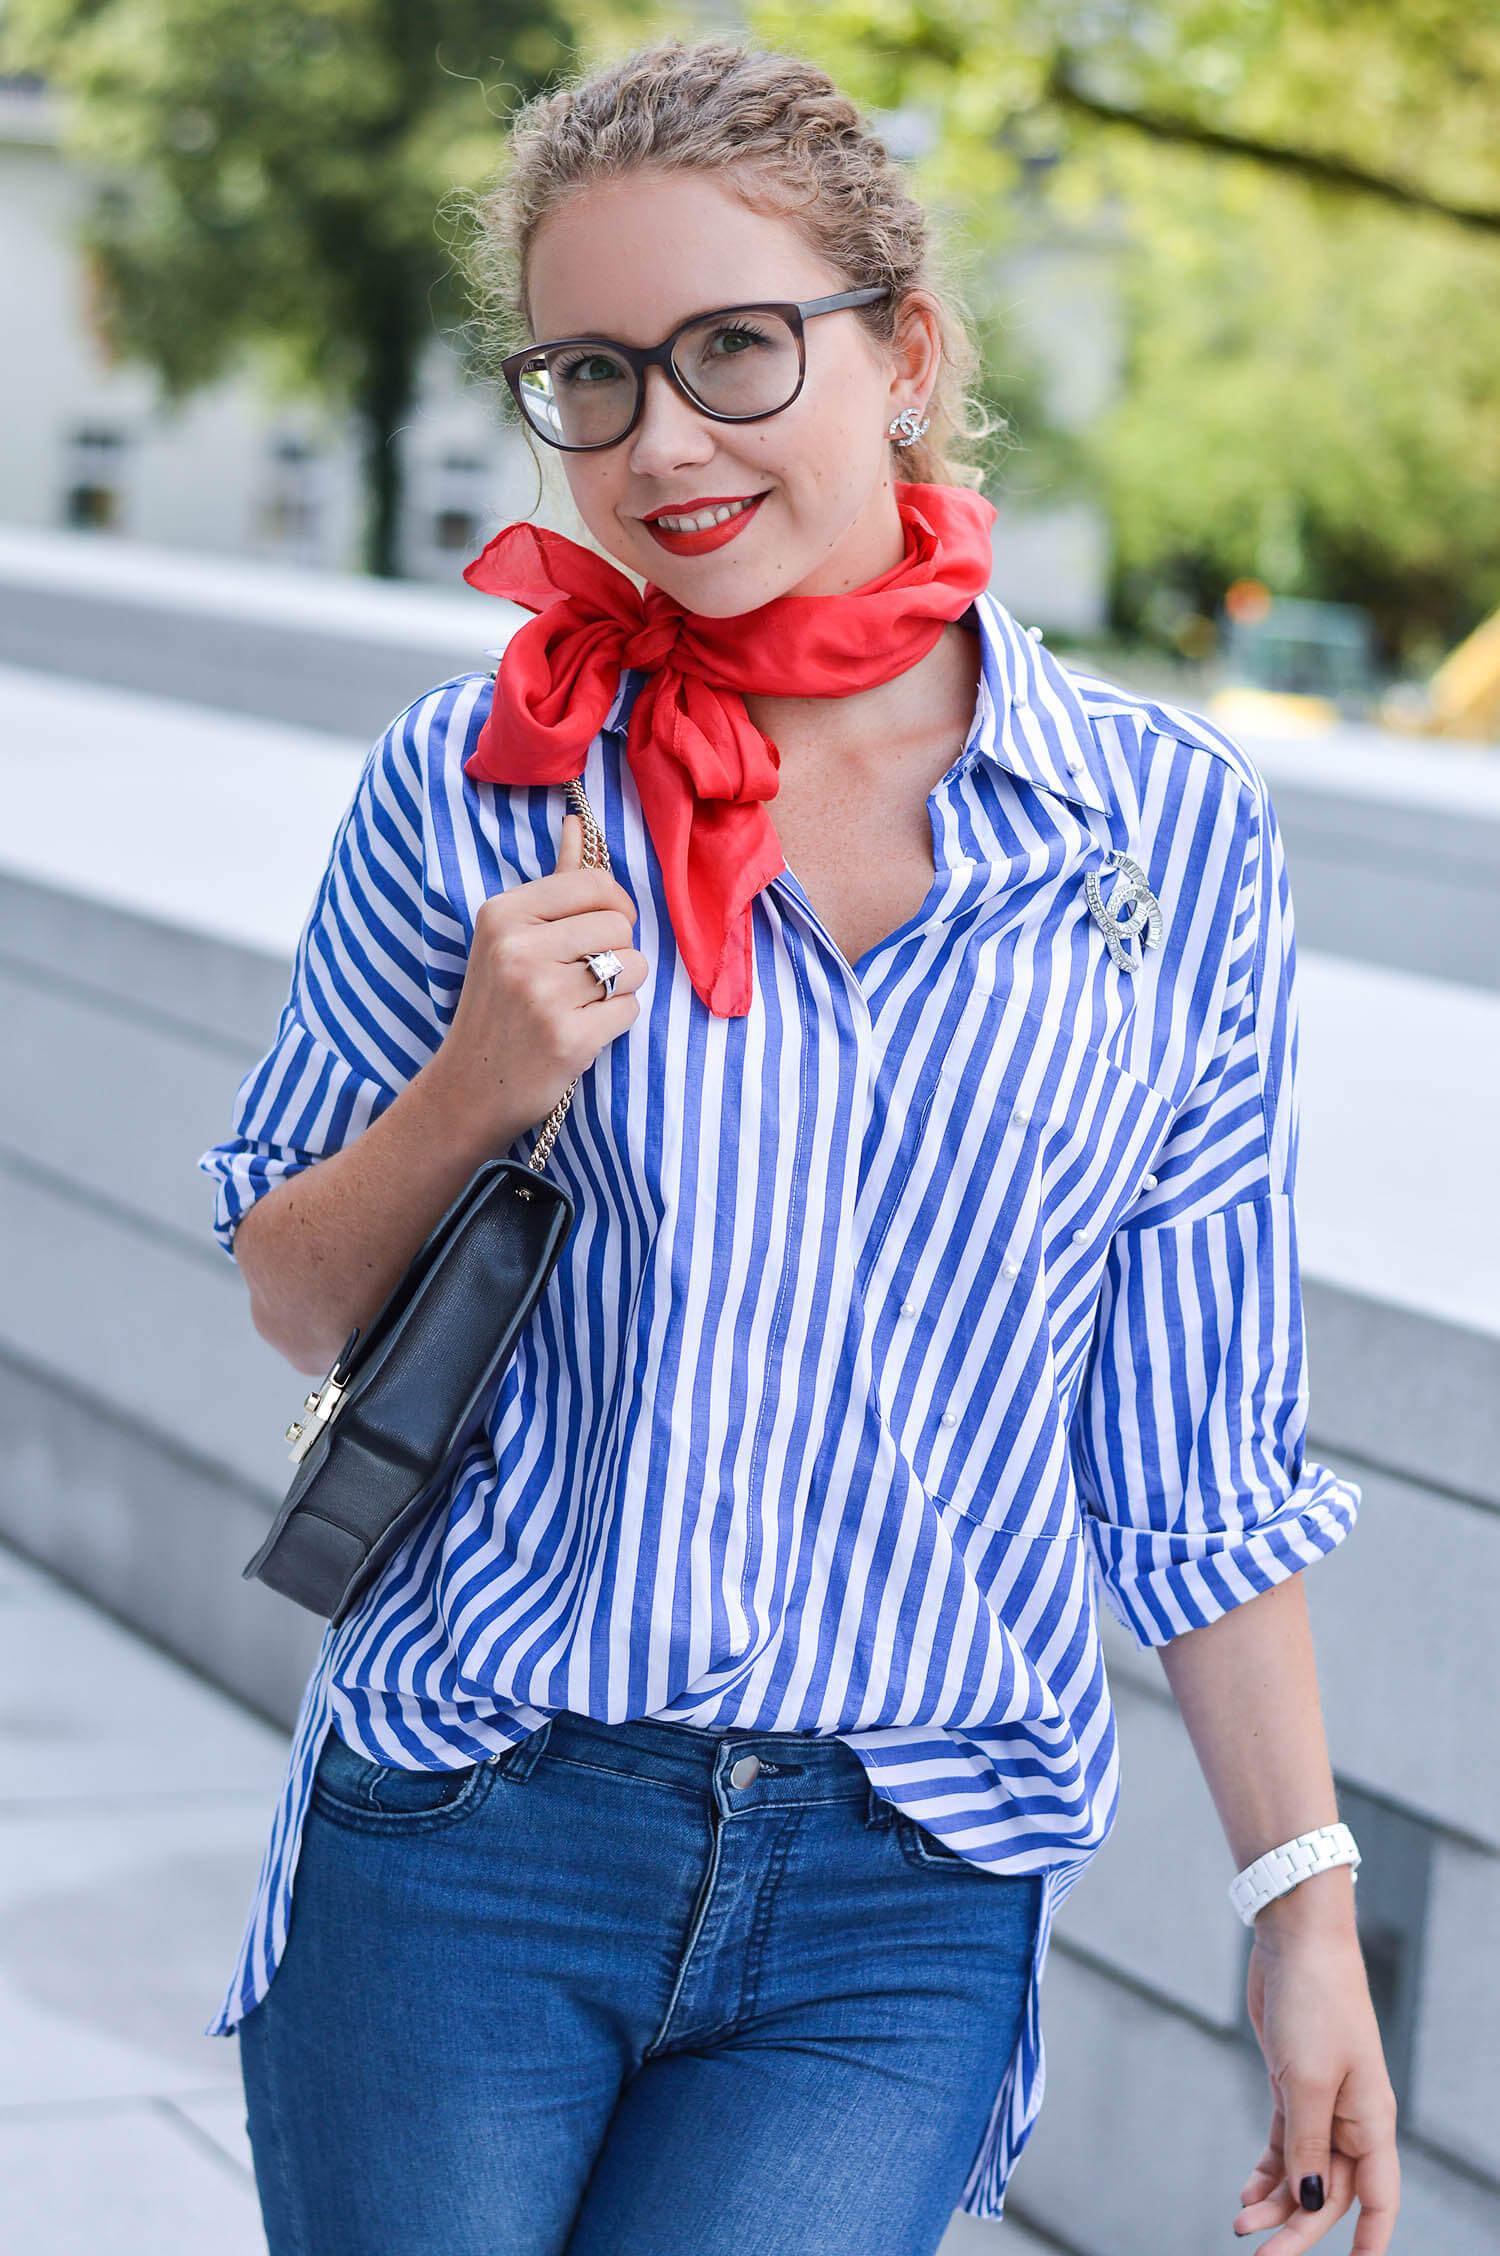 kationette-fashionblog-nrw-outfit-zara-Striped-blouse-Cropped-Jeans-Adiletten